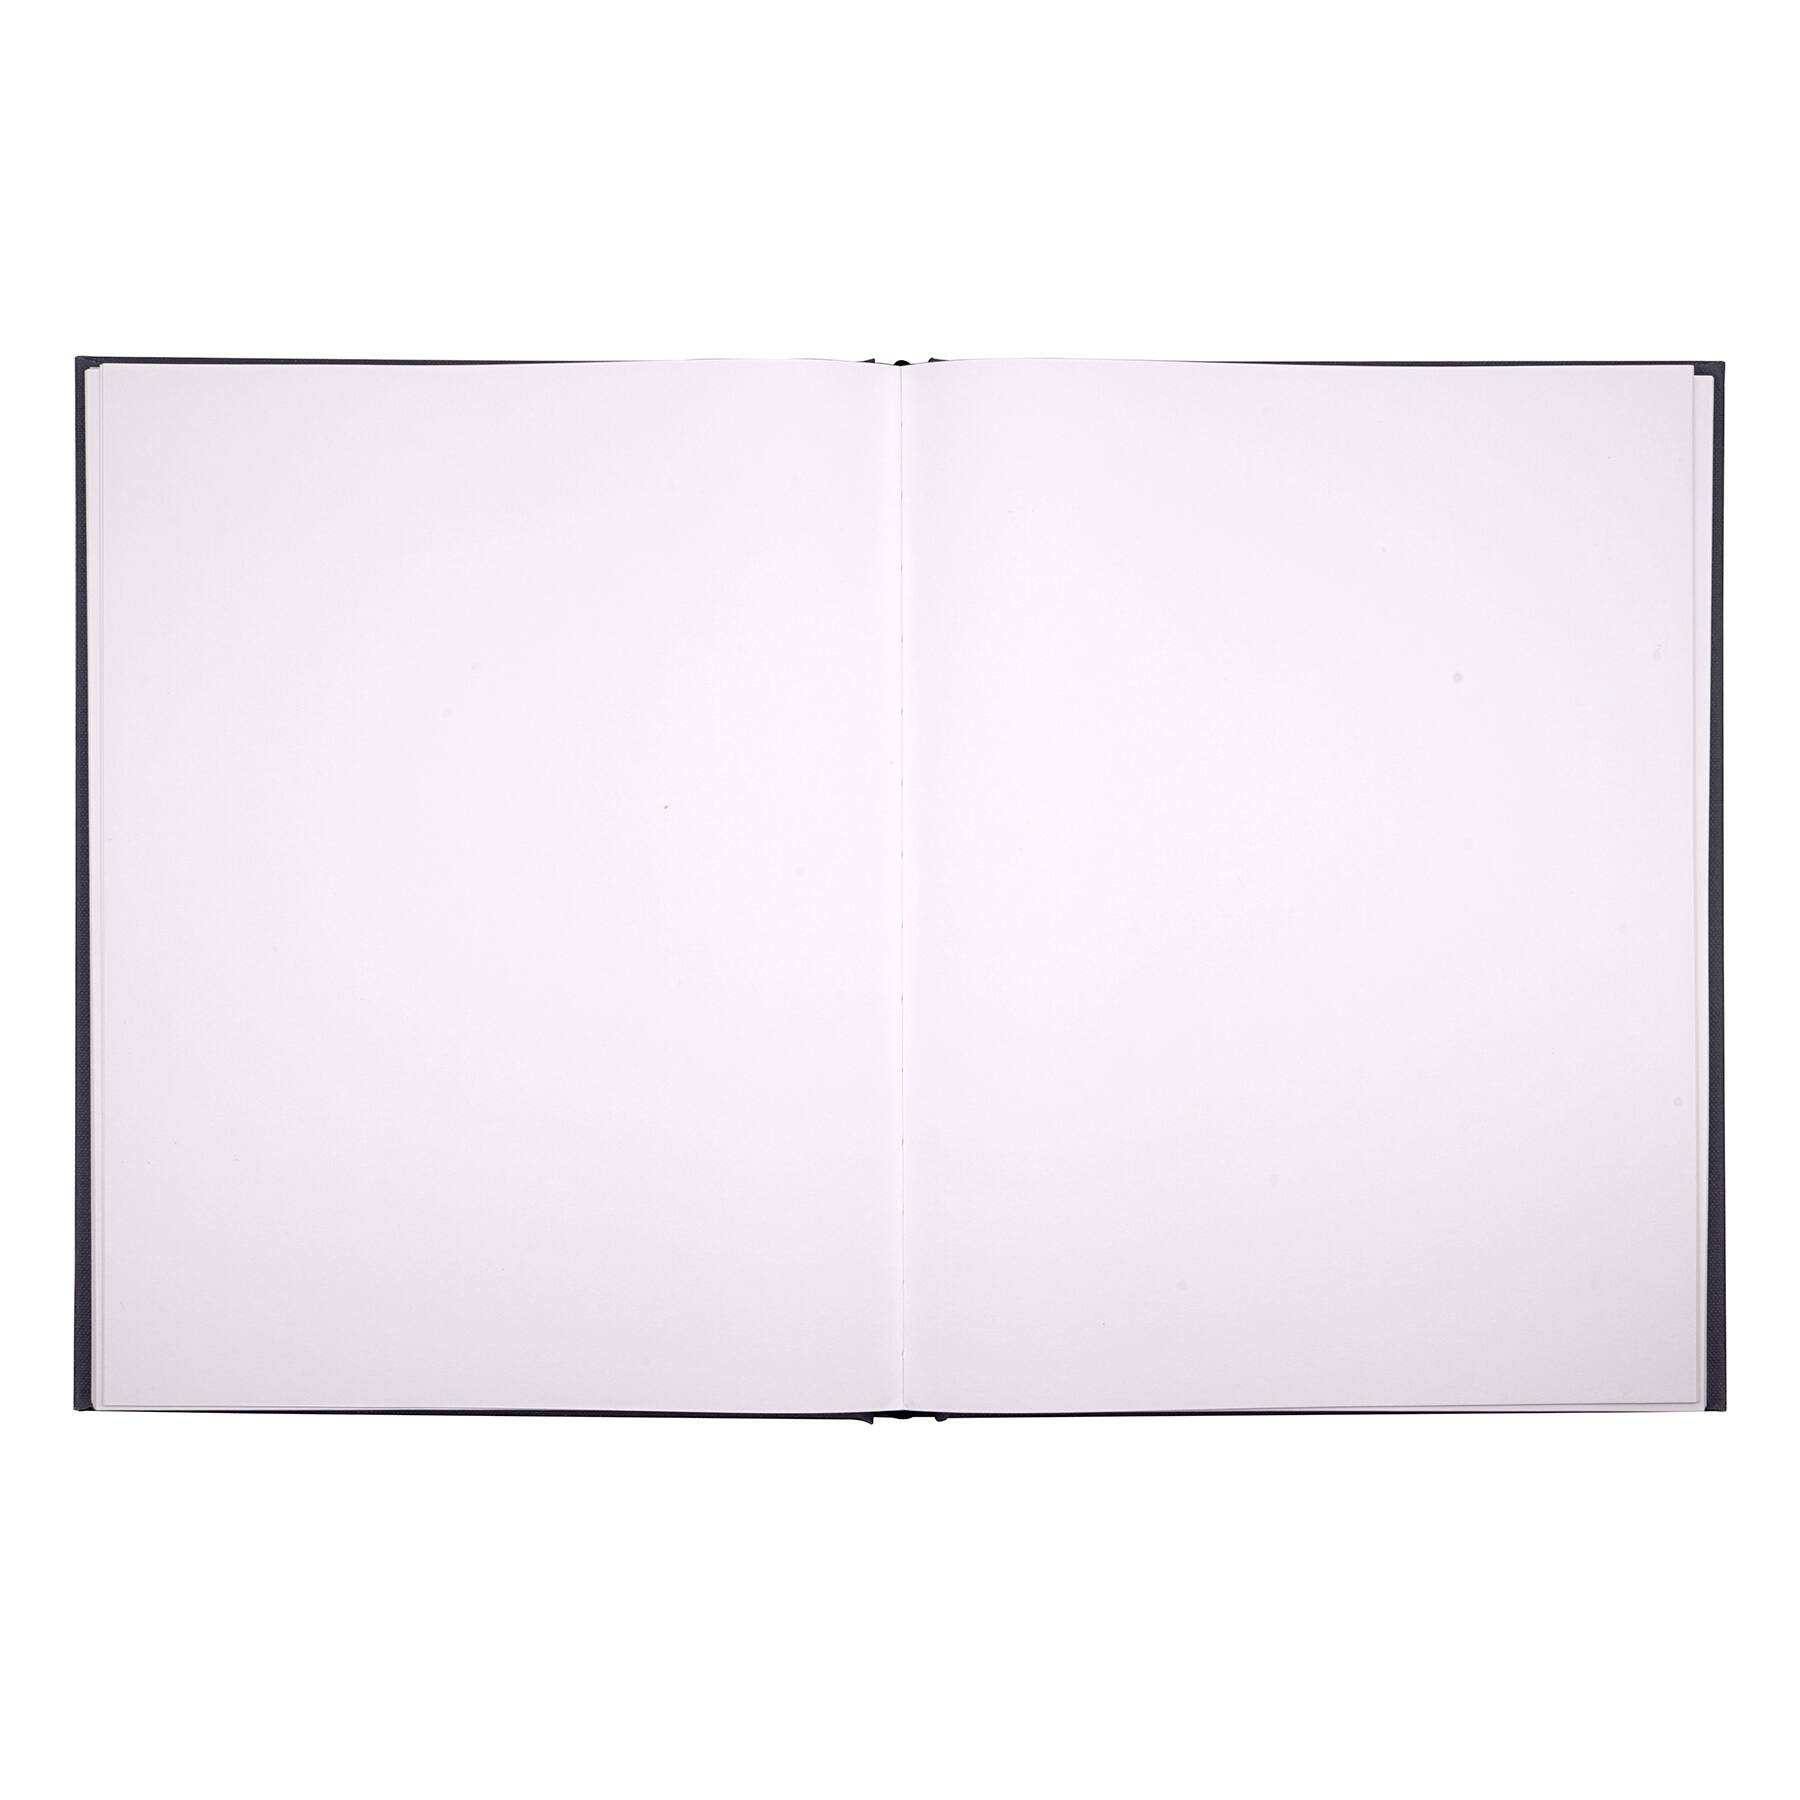 12 Pack: Gray Hardcover Sketchbook by Artist's Loft™, 8.5 x 11